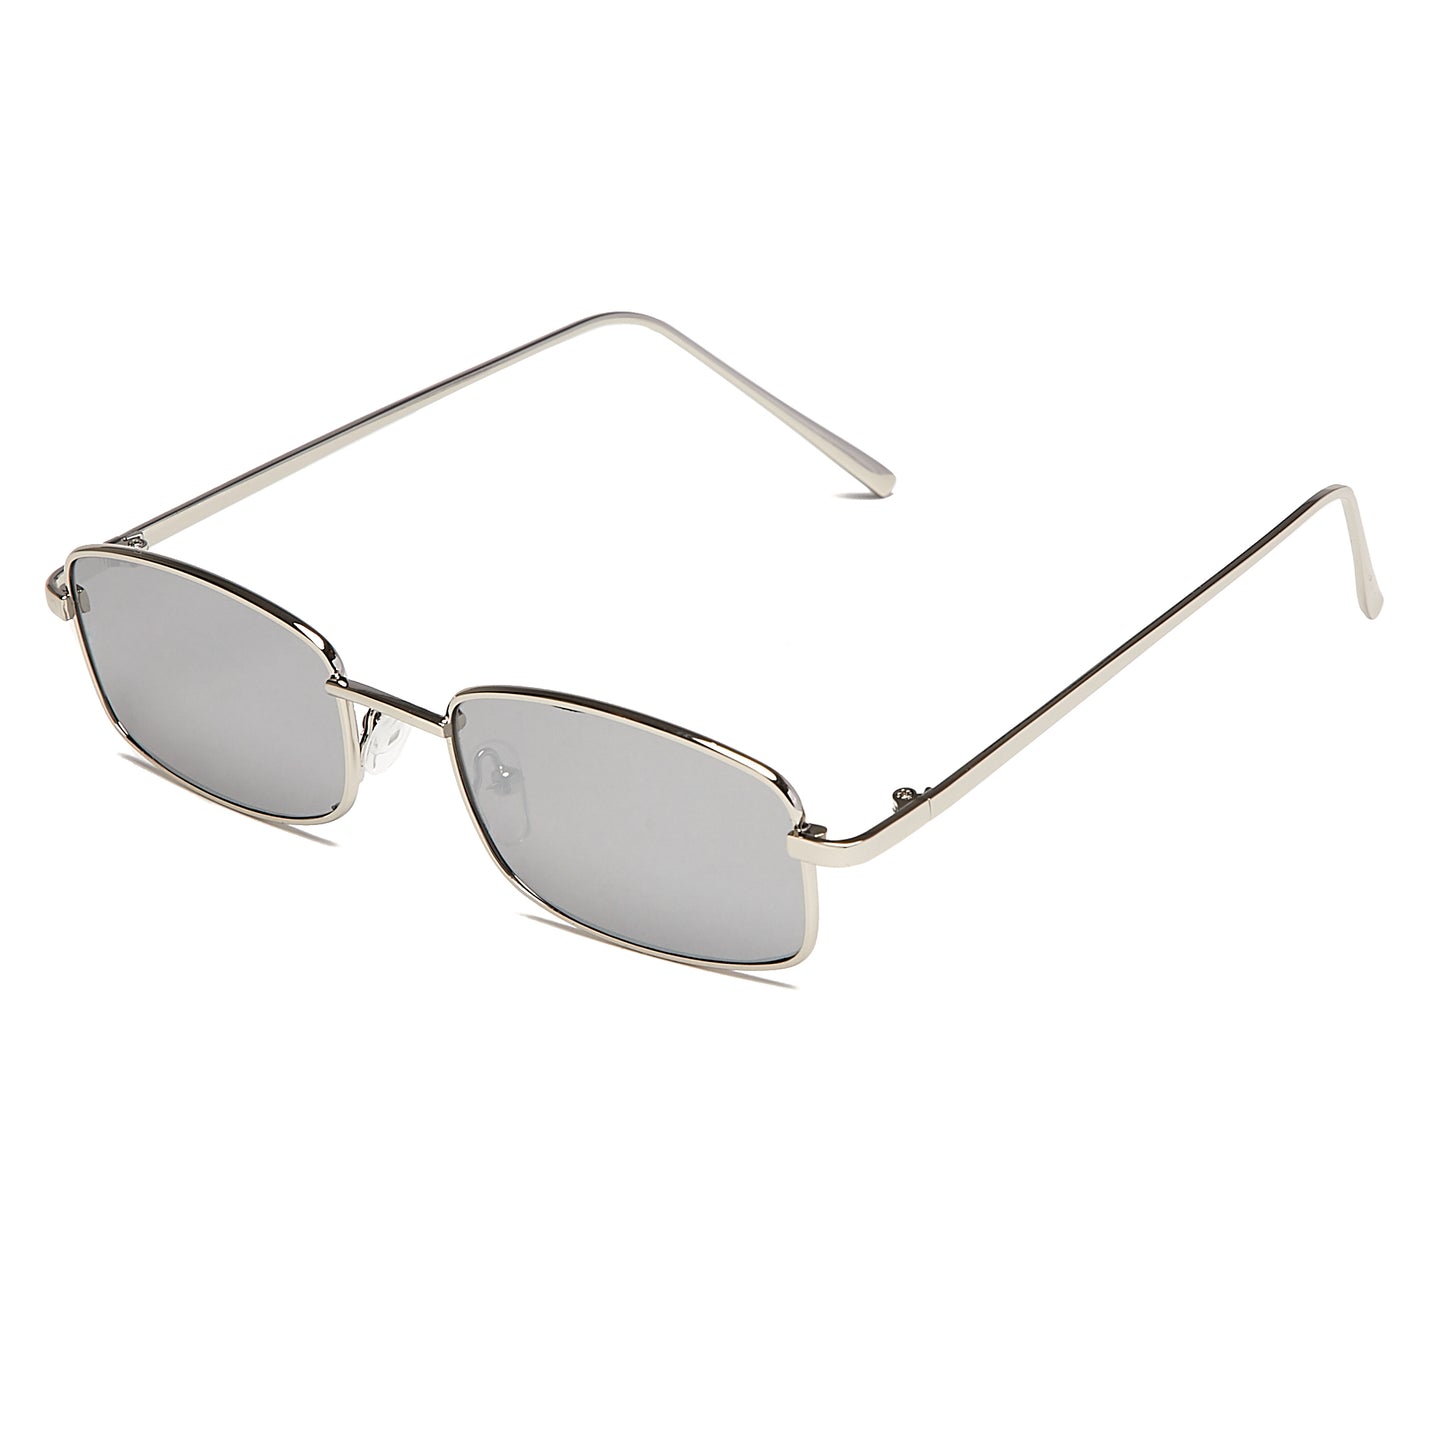 NEO (Size 51) UV-Protected Mens Vintage Rectangular Sunglasses - IDENTITY Apparel Shop